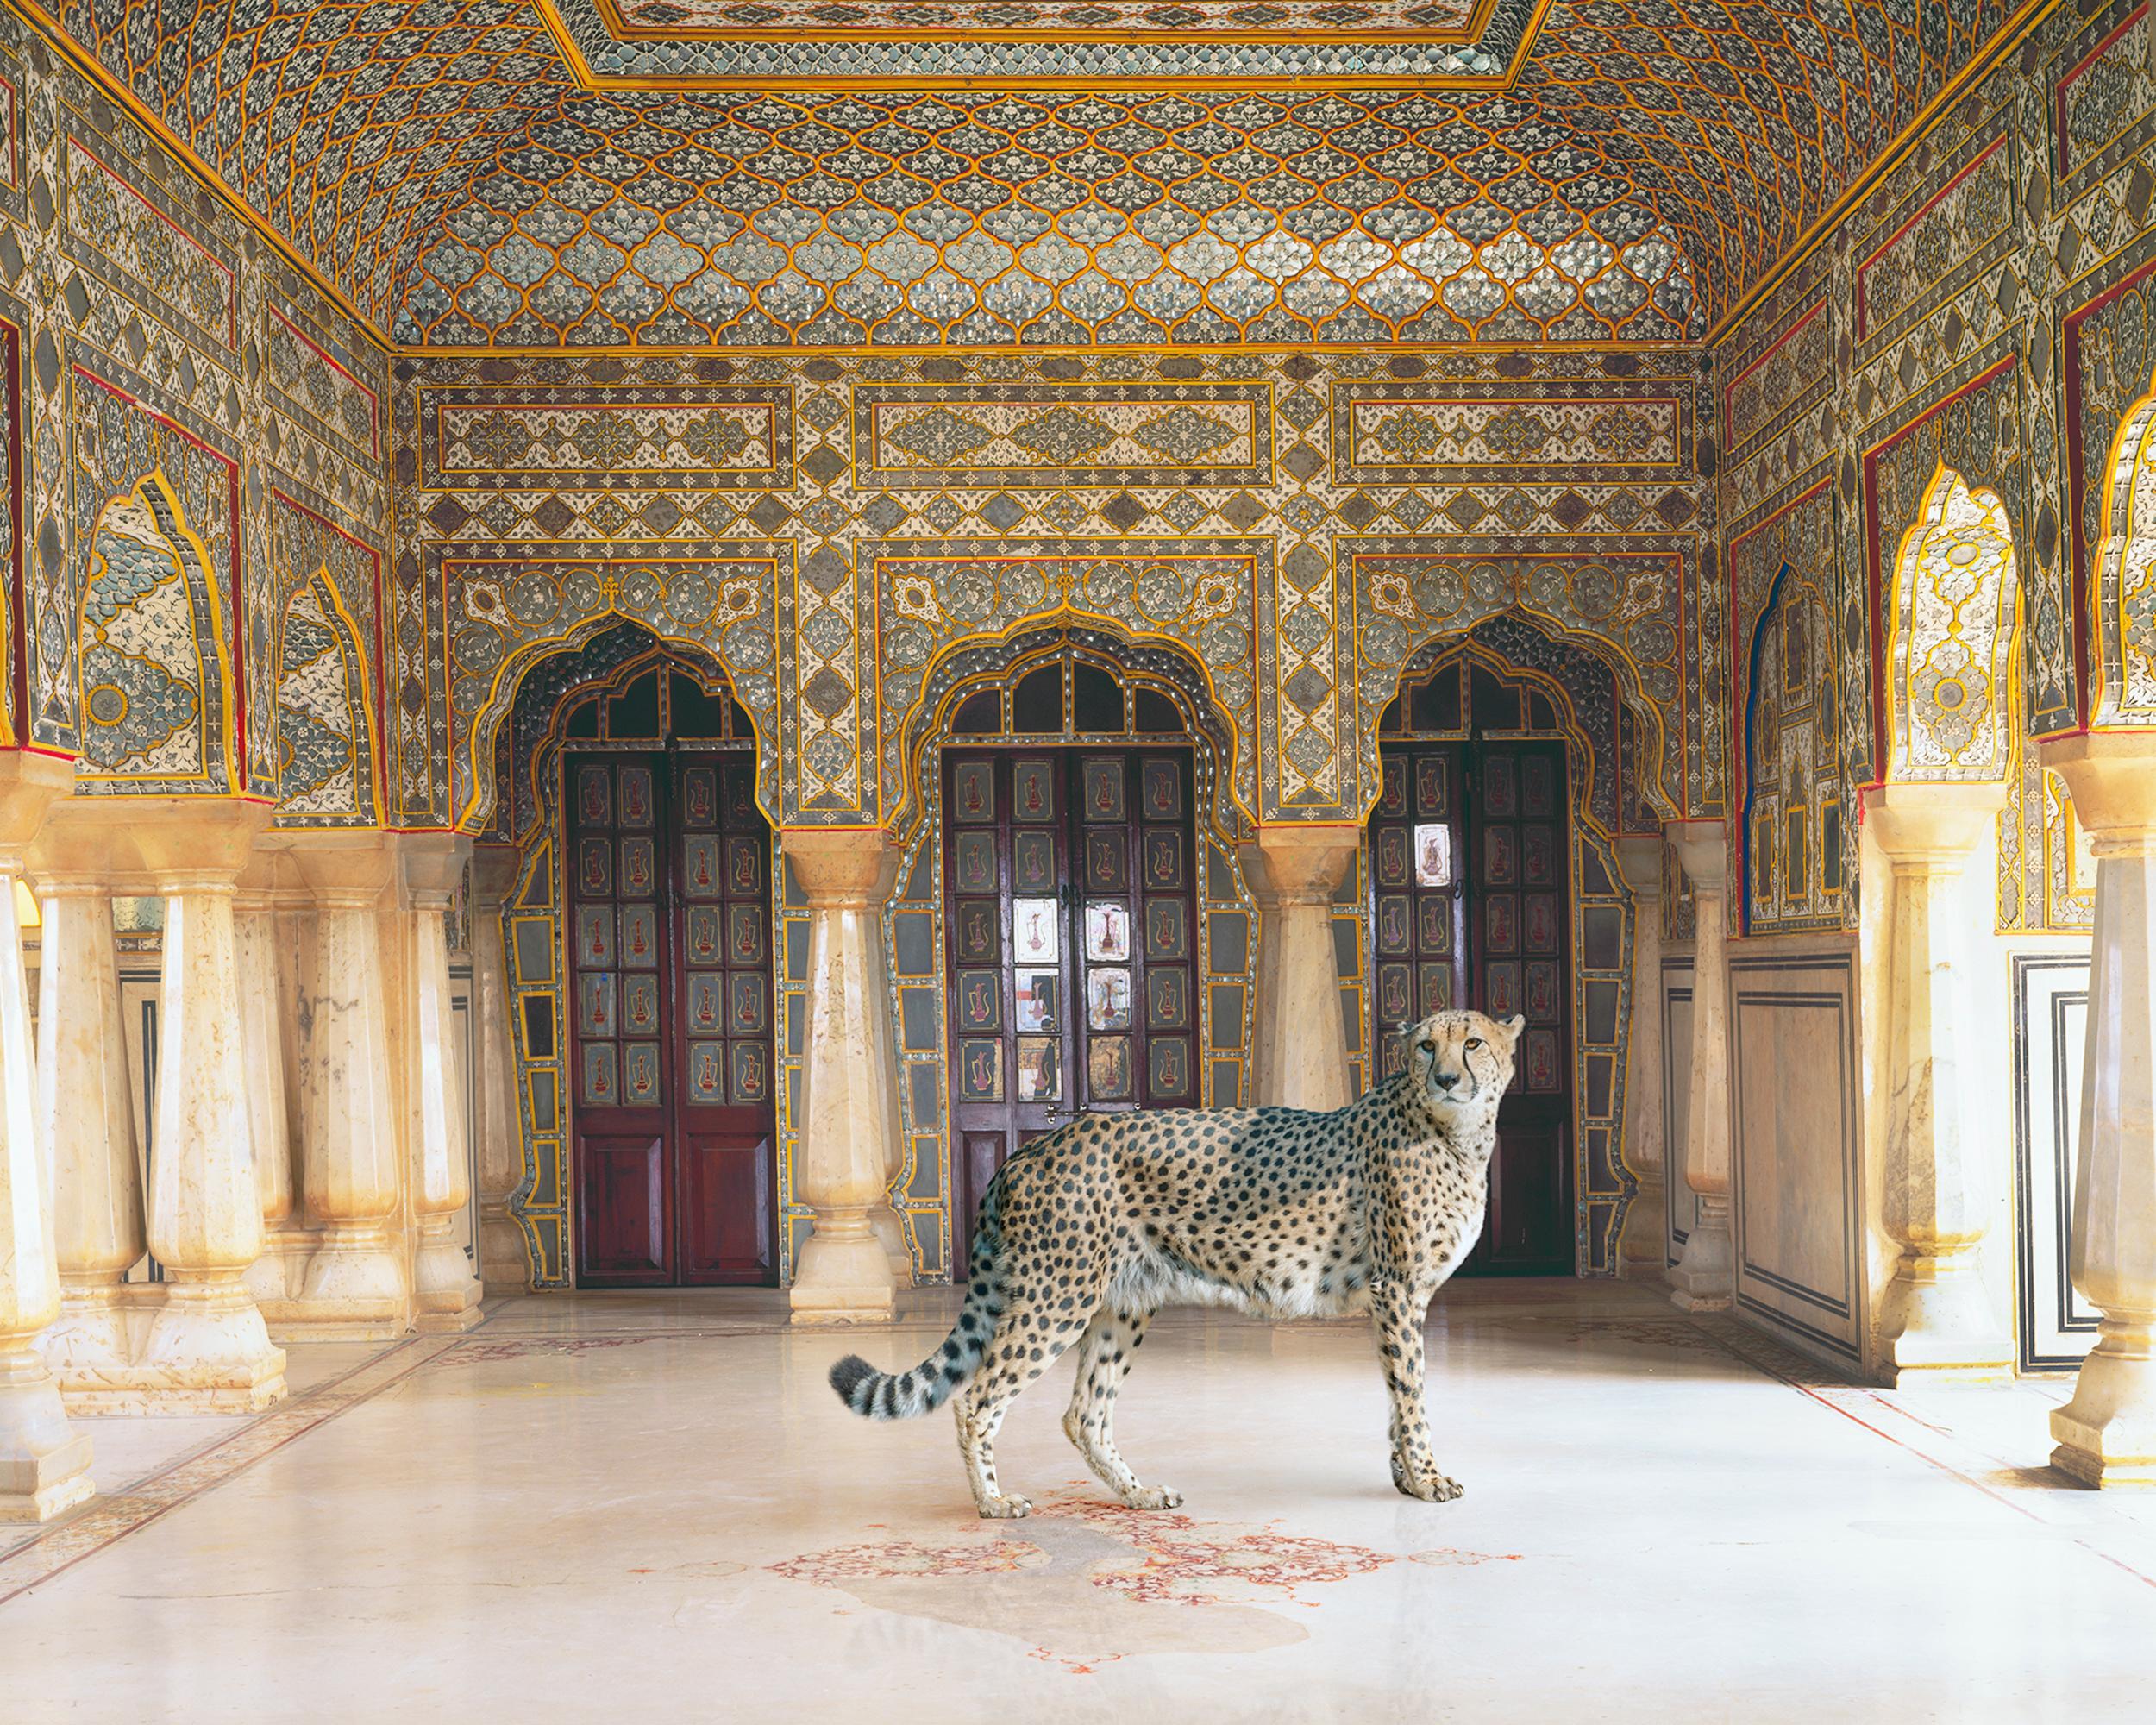 Die Rückkehr des Jägers, Chandra Mahal, Jaipur, 2012